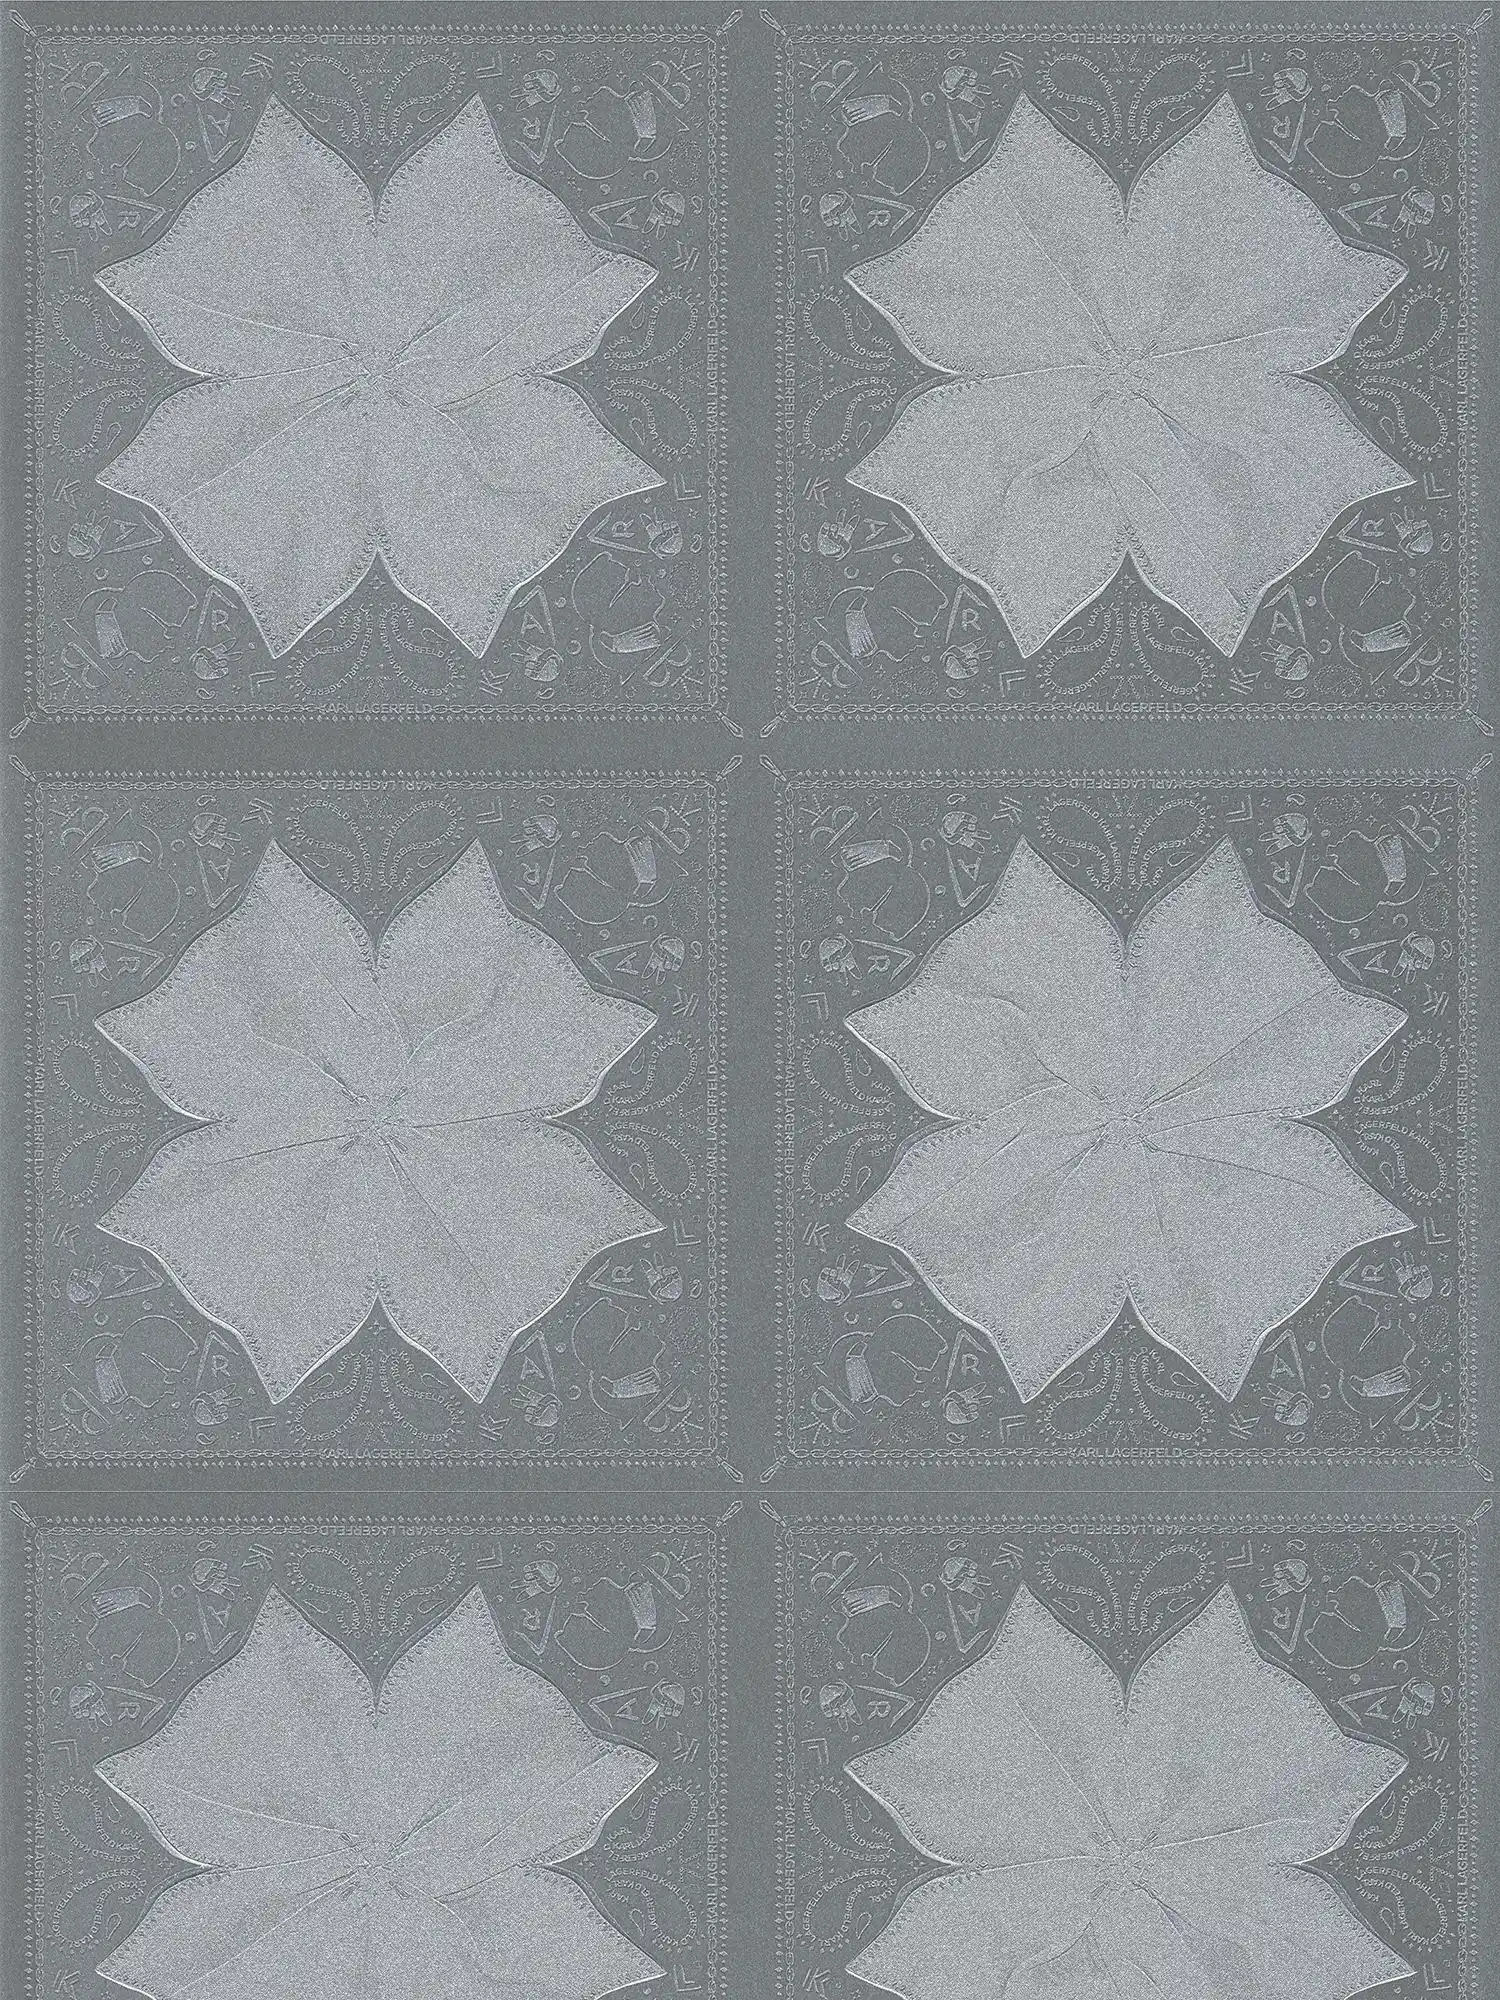 Wallpaper Karl LAGERFELD tie pattern - grey, metallic
